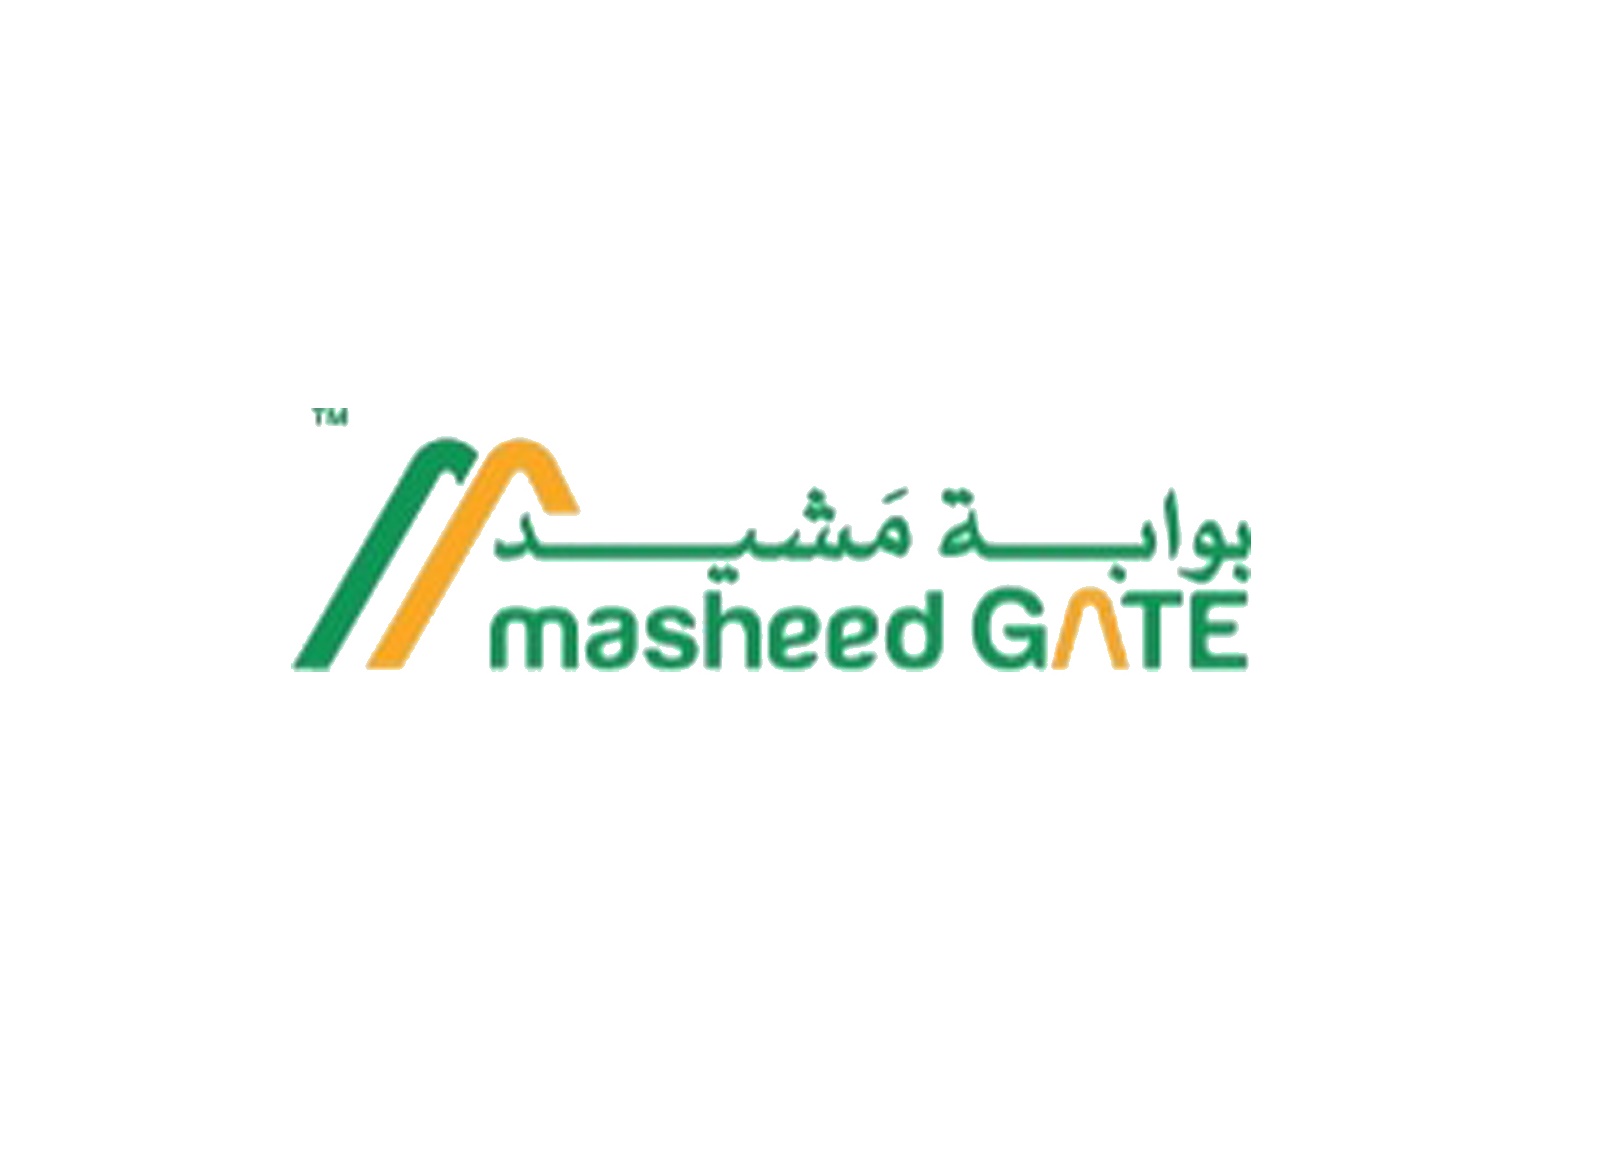 masheed launch the onling selling platform "masheedGATE"